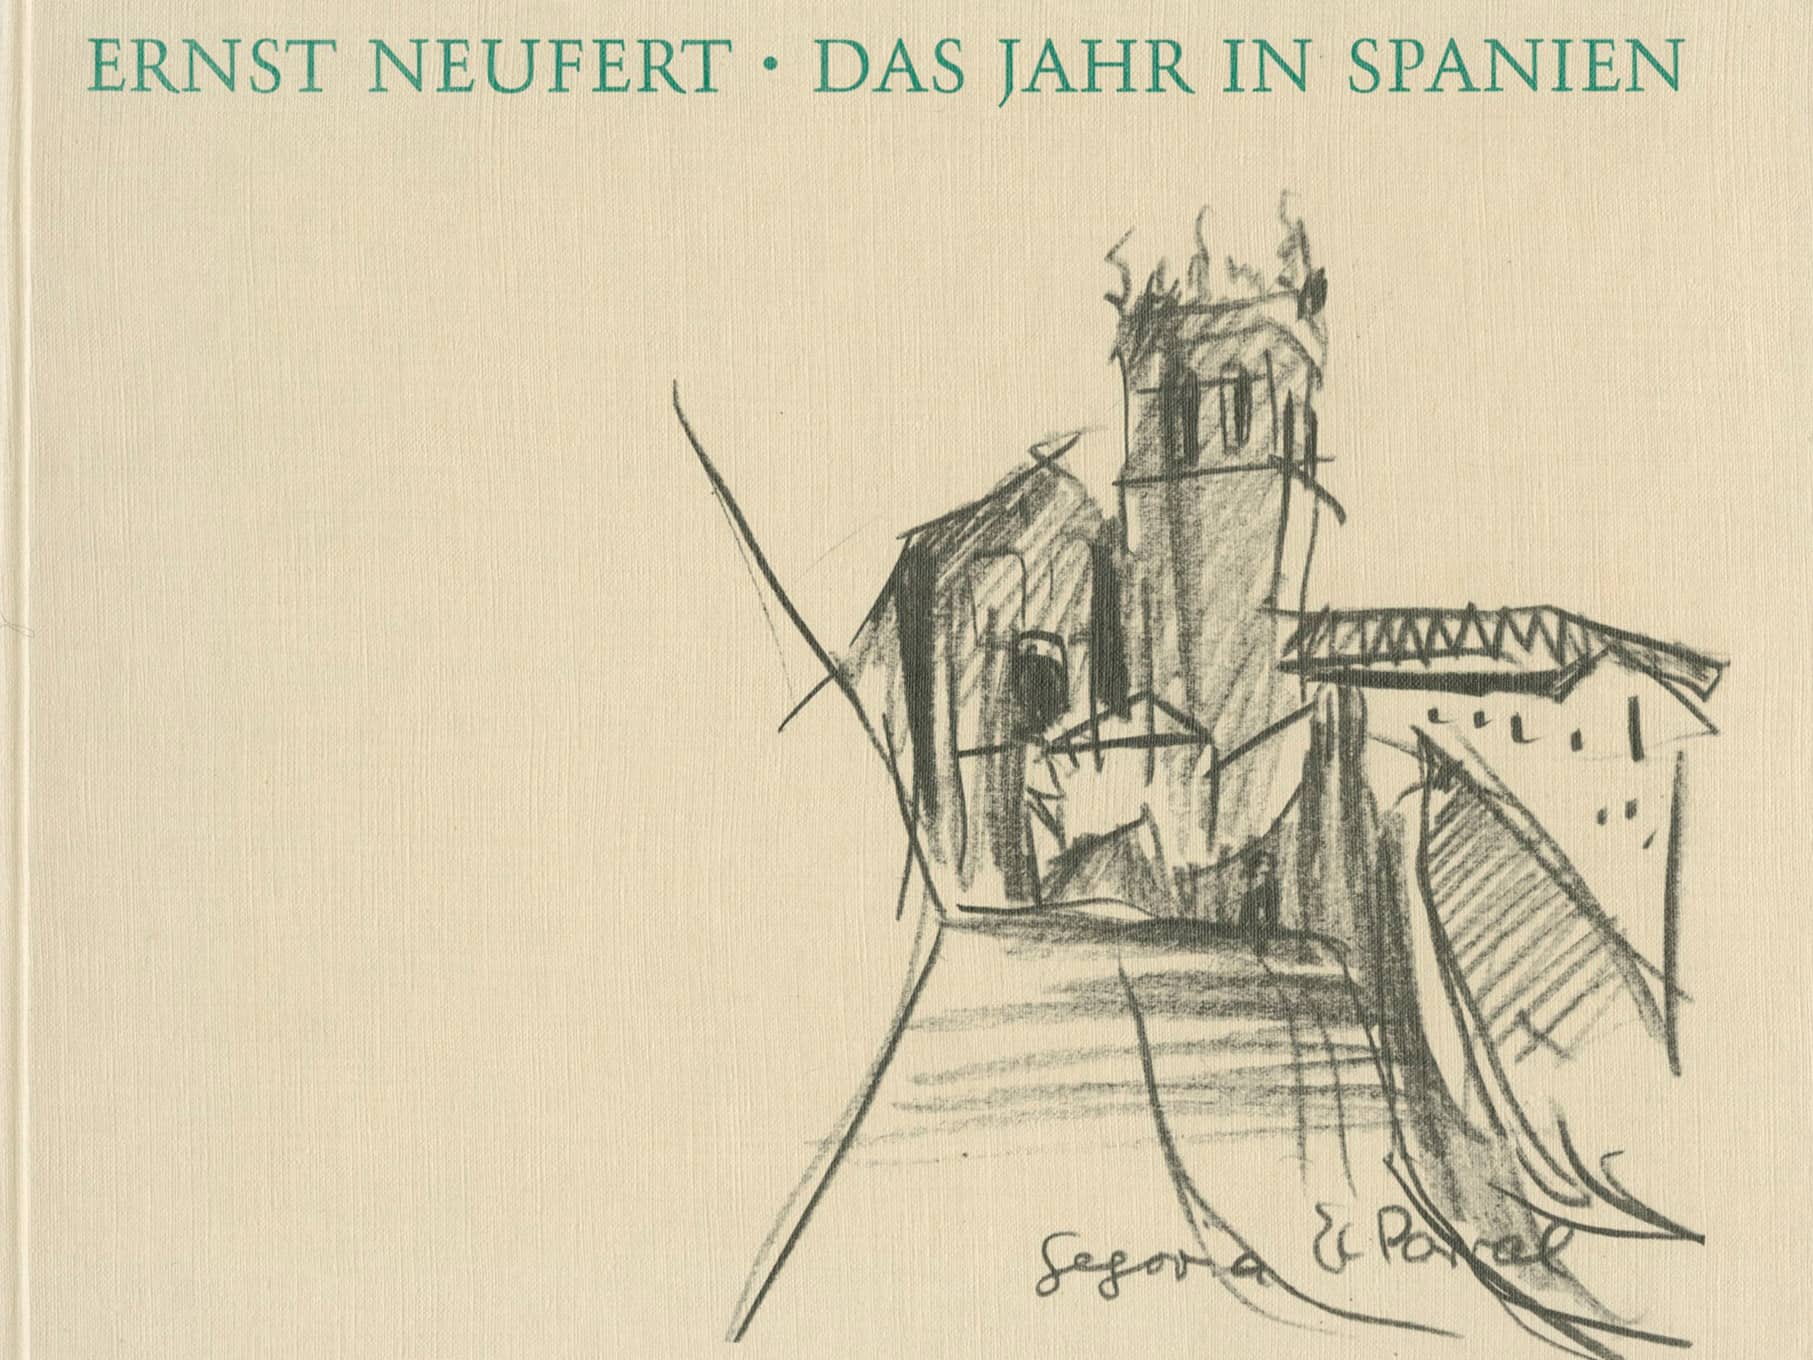 Book Cover “Year in Spain 1920/21”, Ernst Neufert